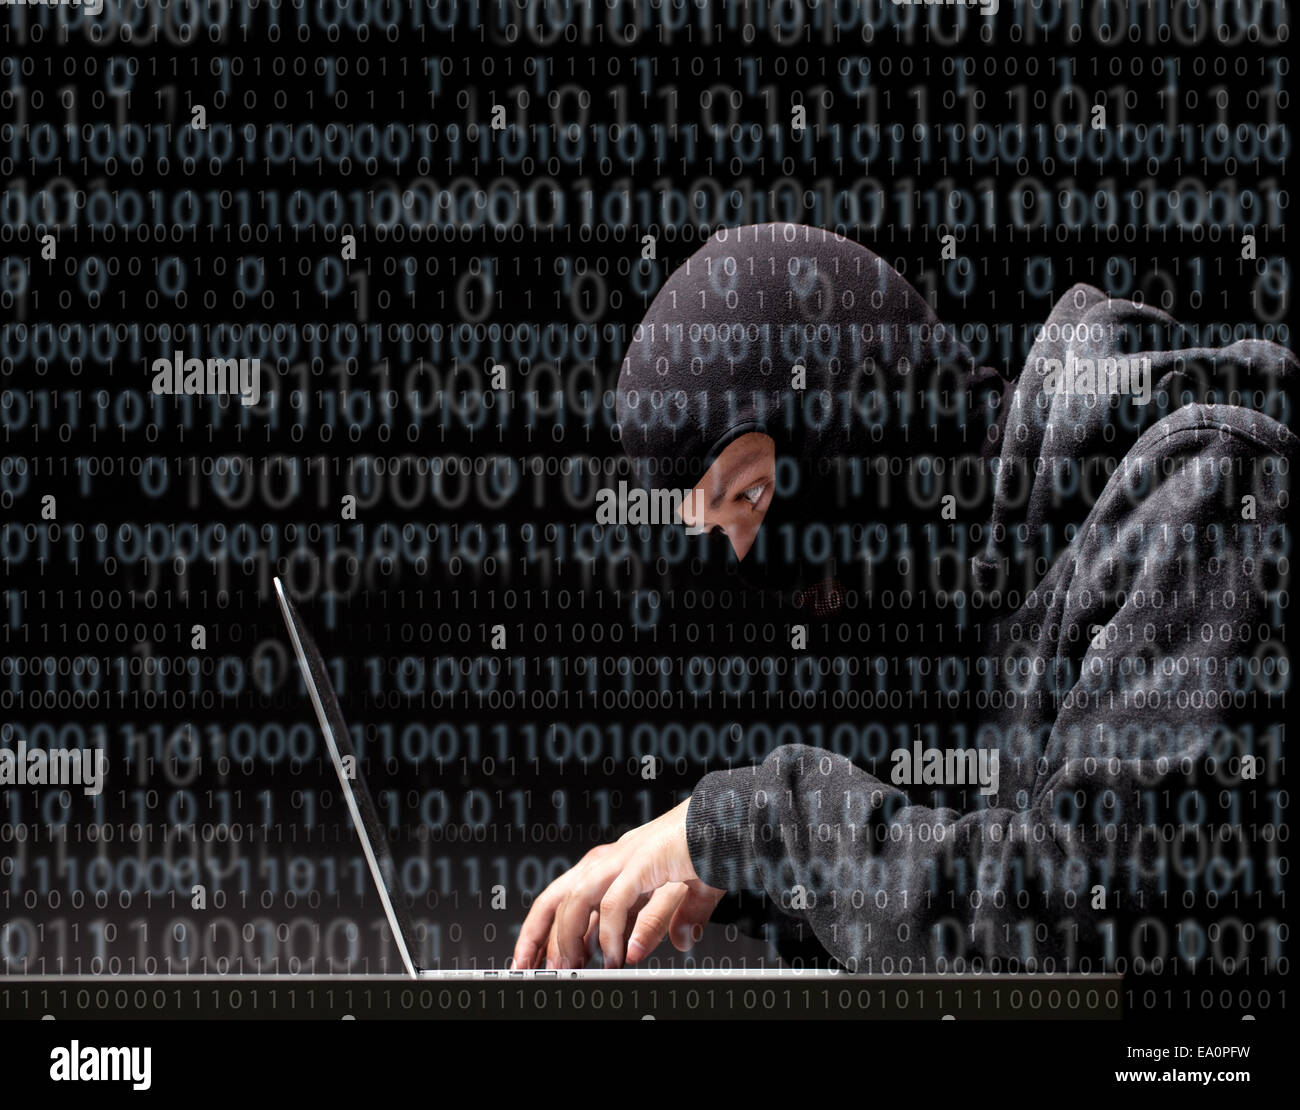 Computer-Hacker in eine Sturmhaube Stockfoto